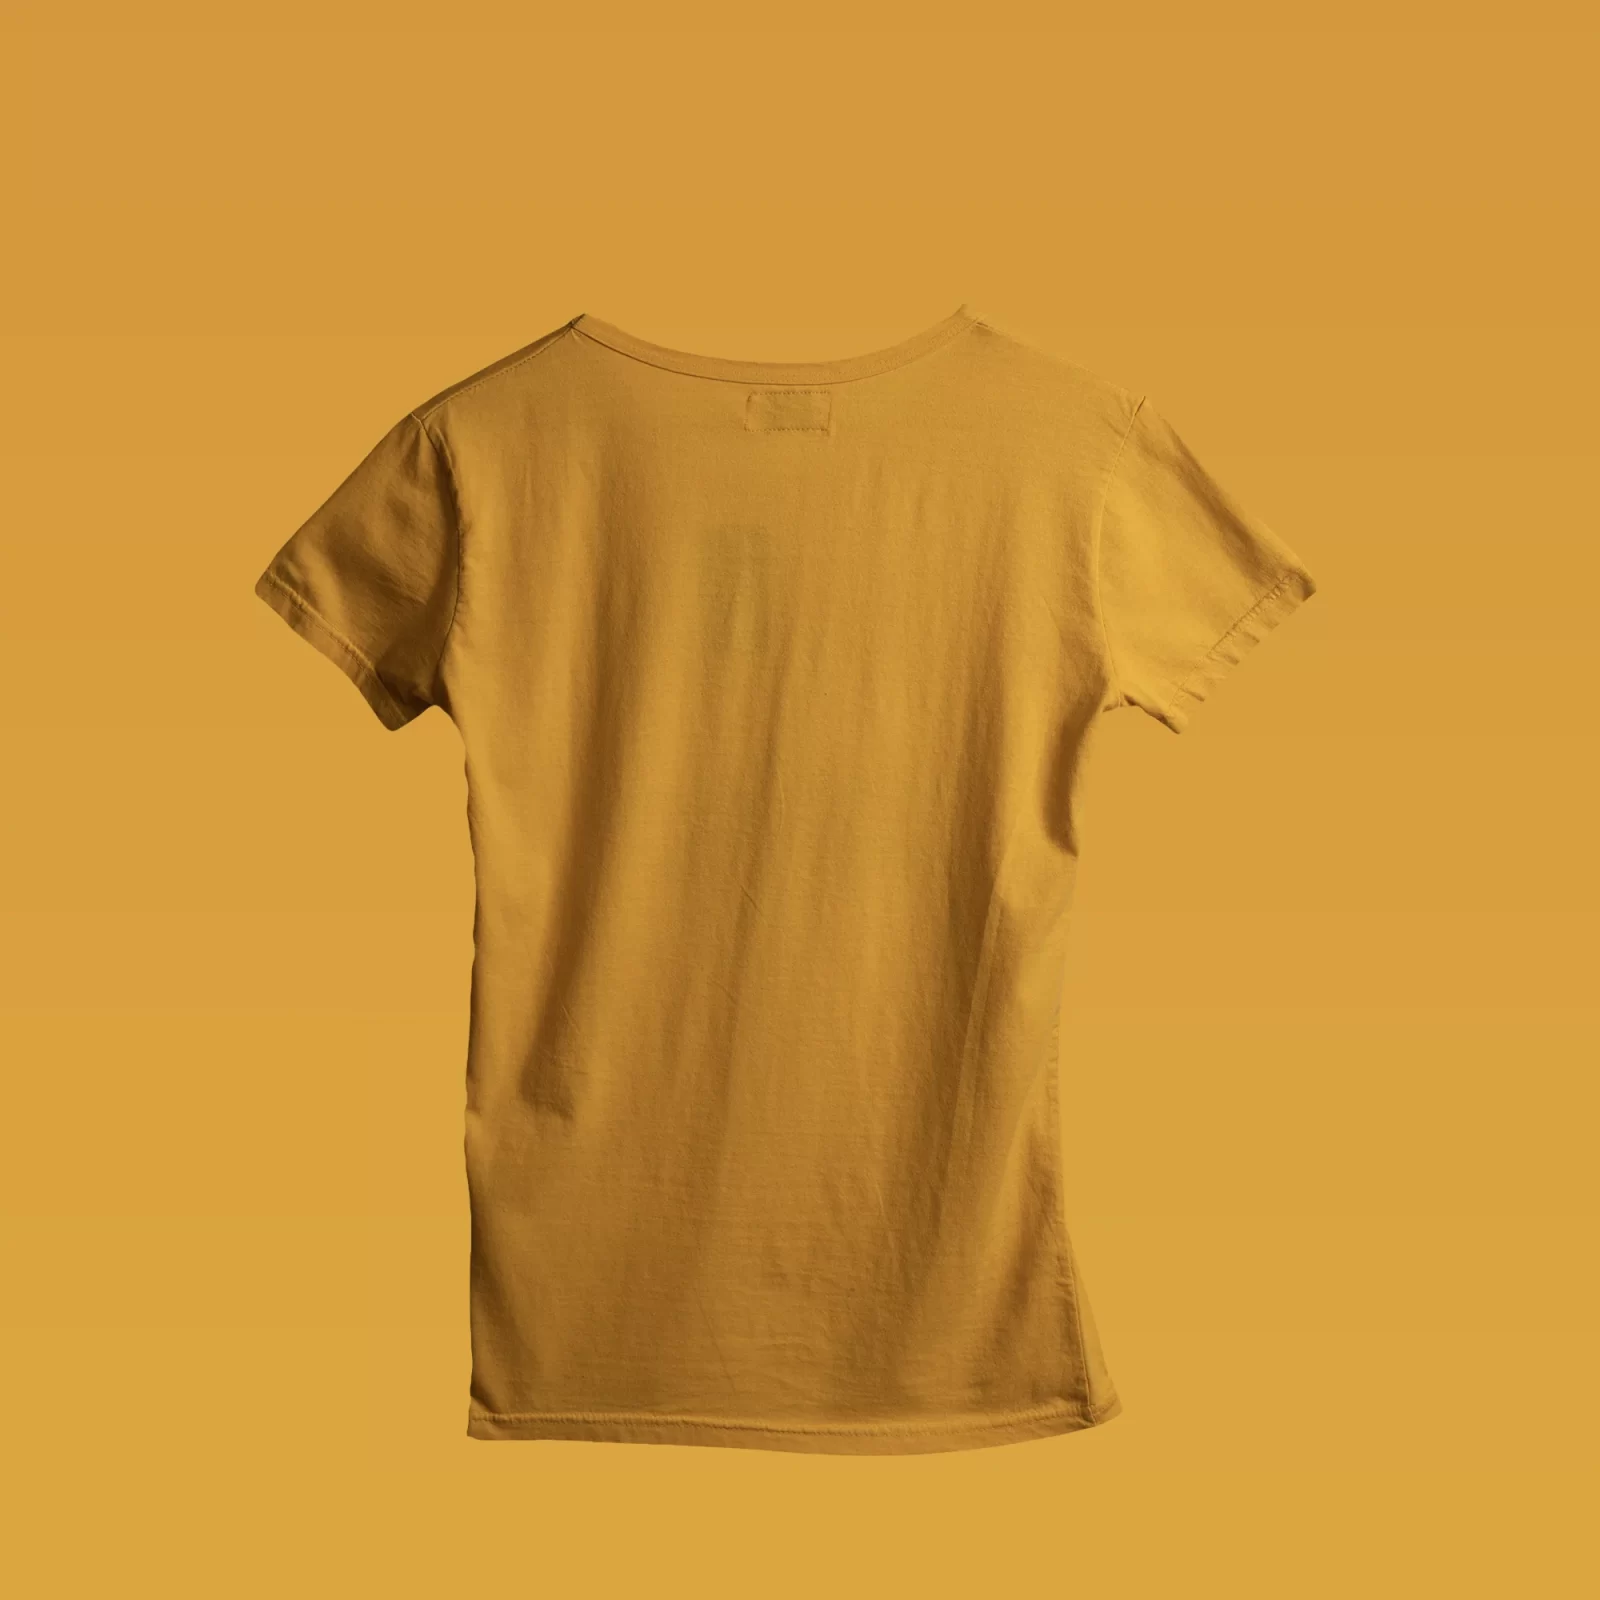 zwync Women’s Spectra Yellow Dragonfly T-shirt back design